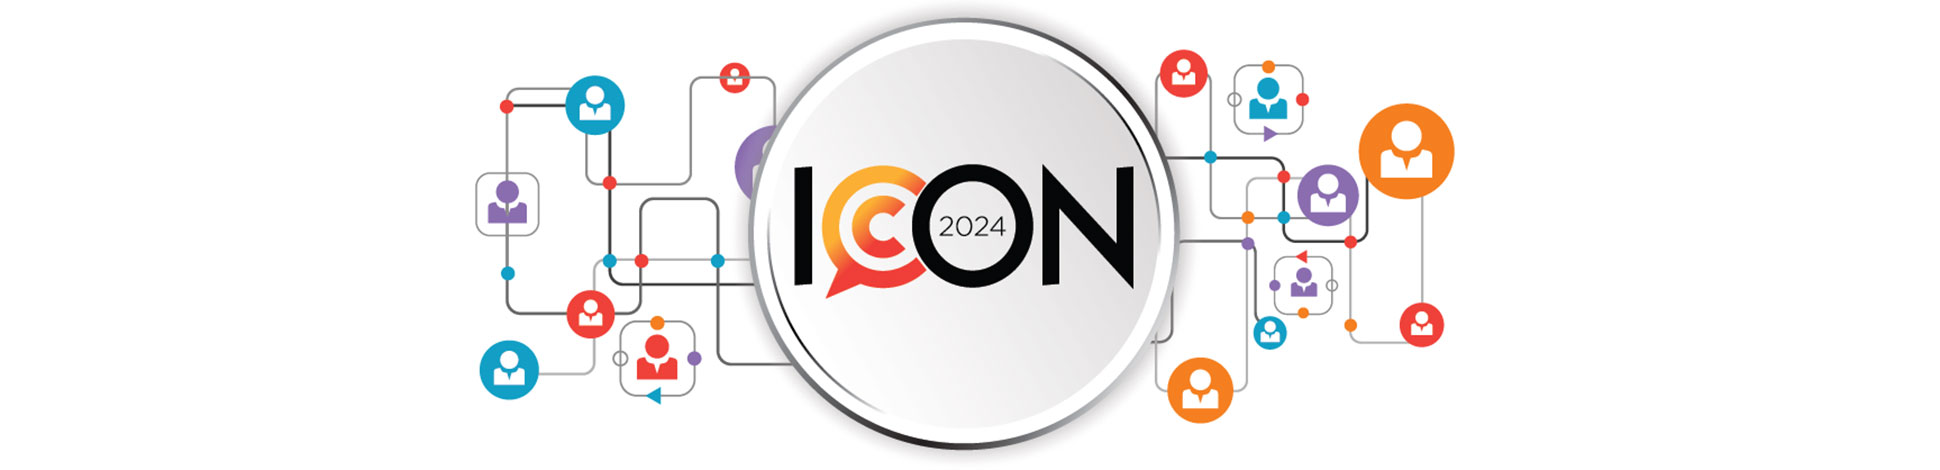 ICON 2024